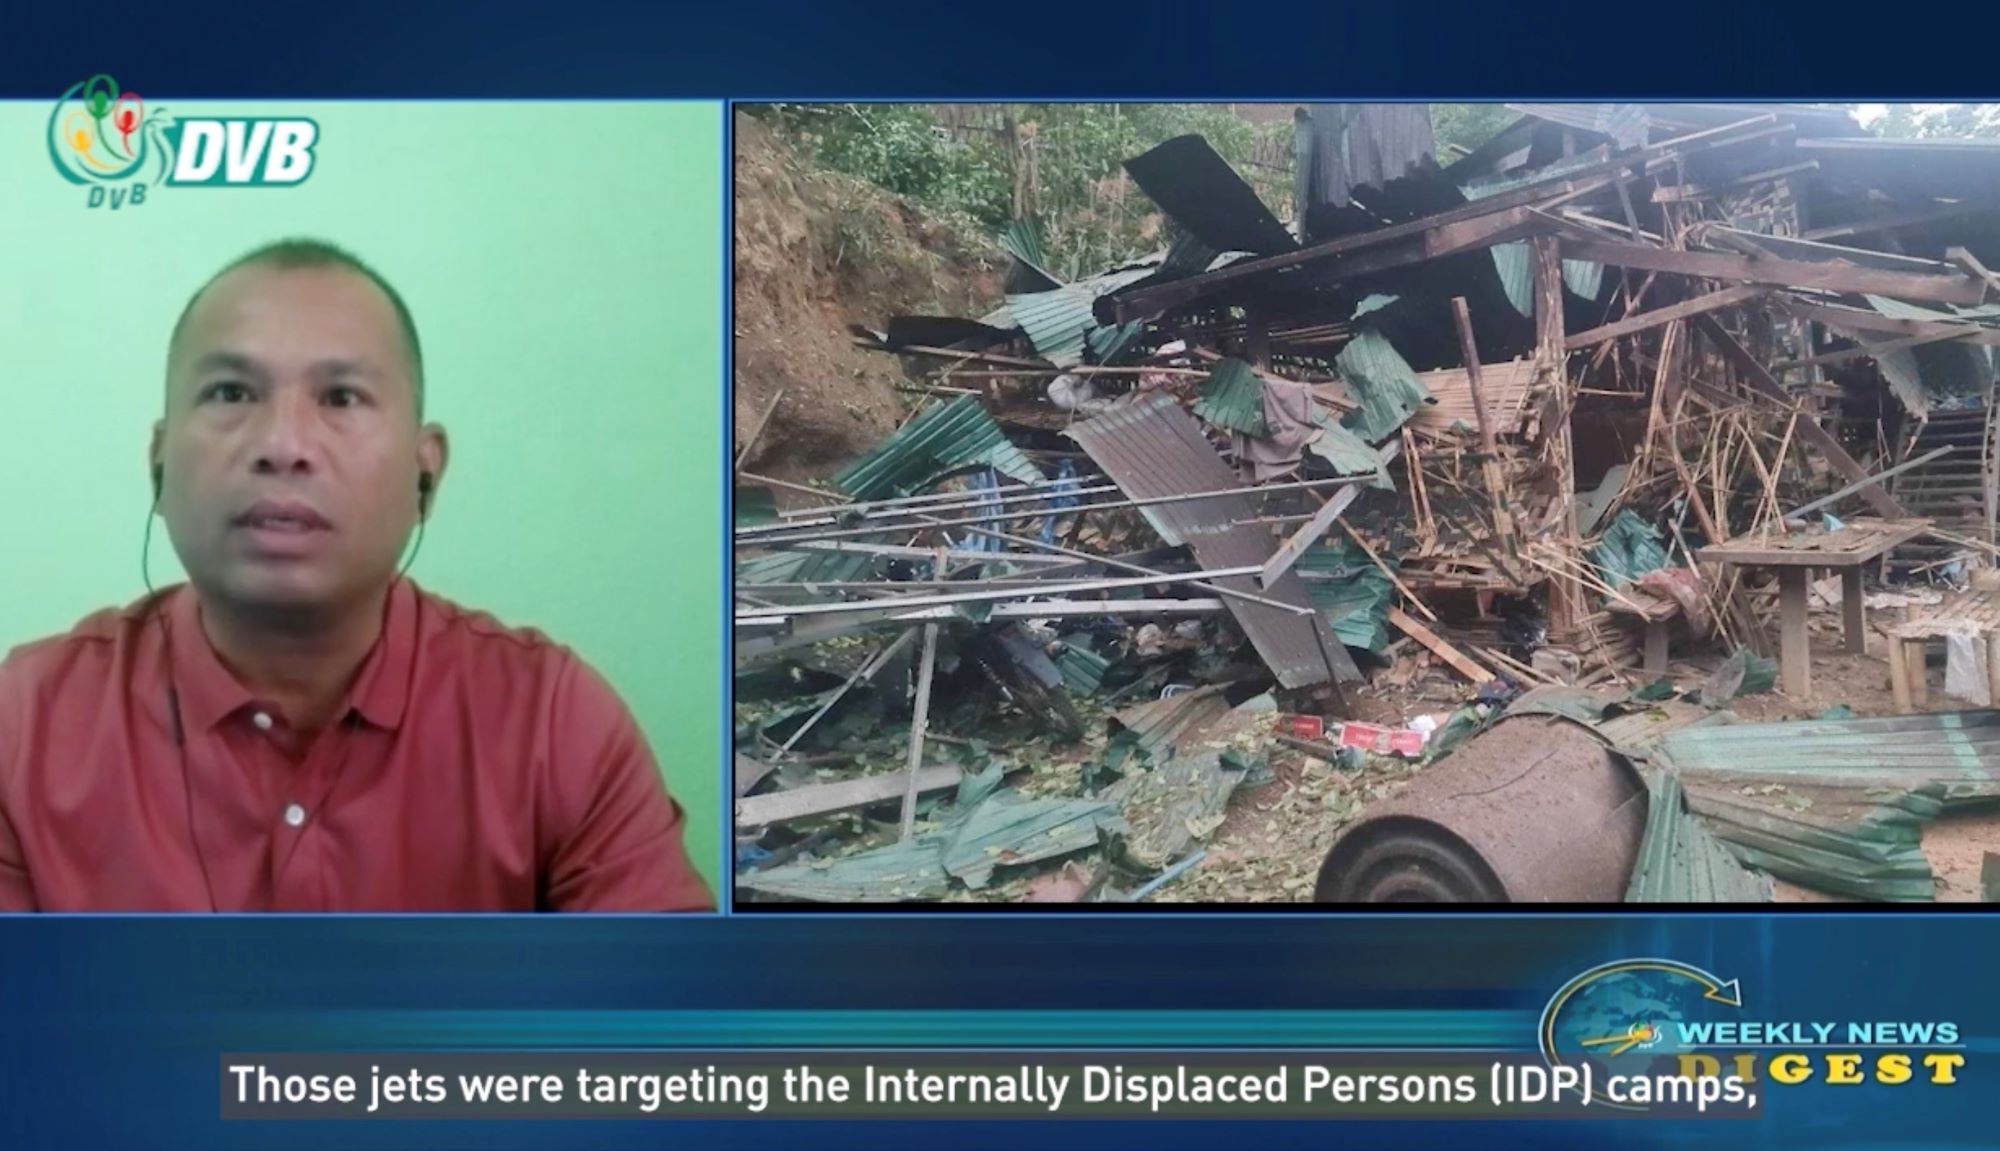 DVB undercover reporter discusses the devastation of bombarded refugee camps he filmed himself.